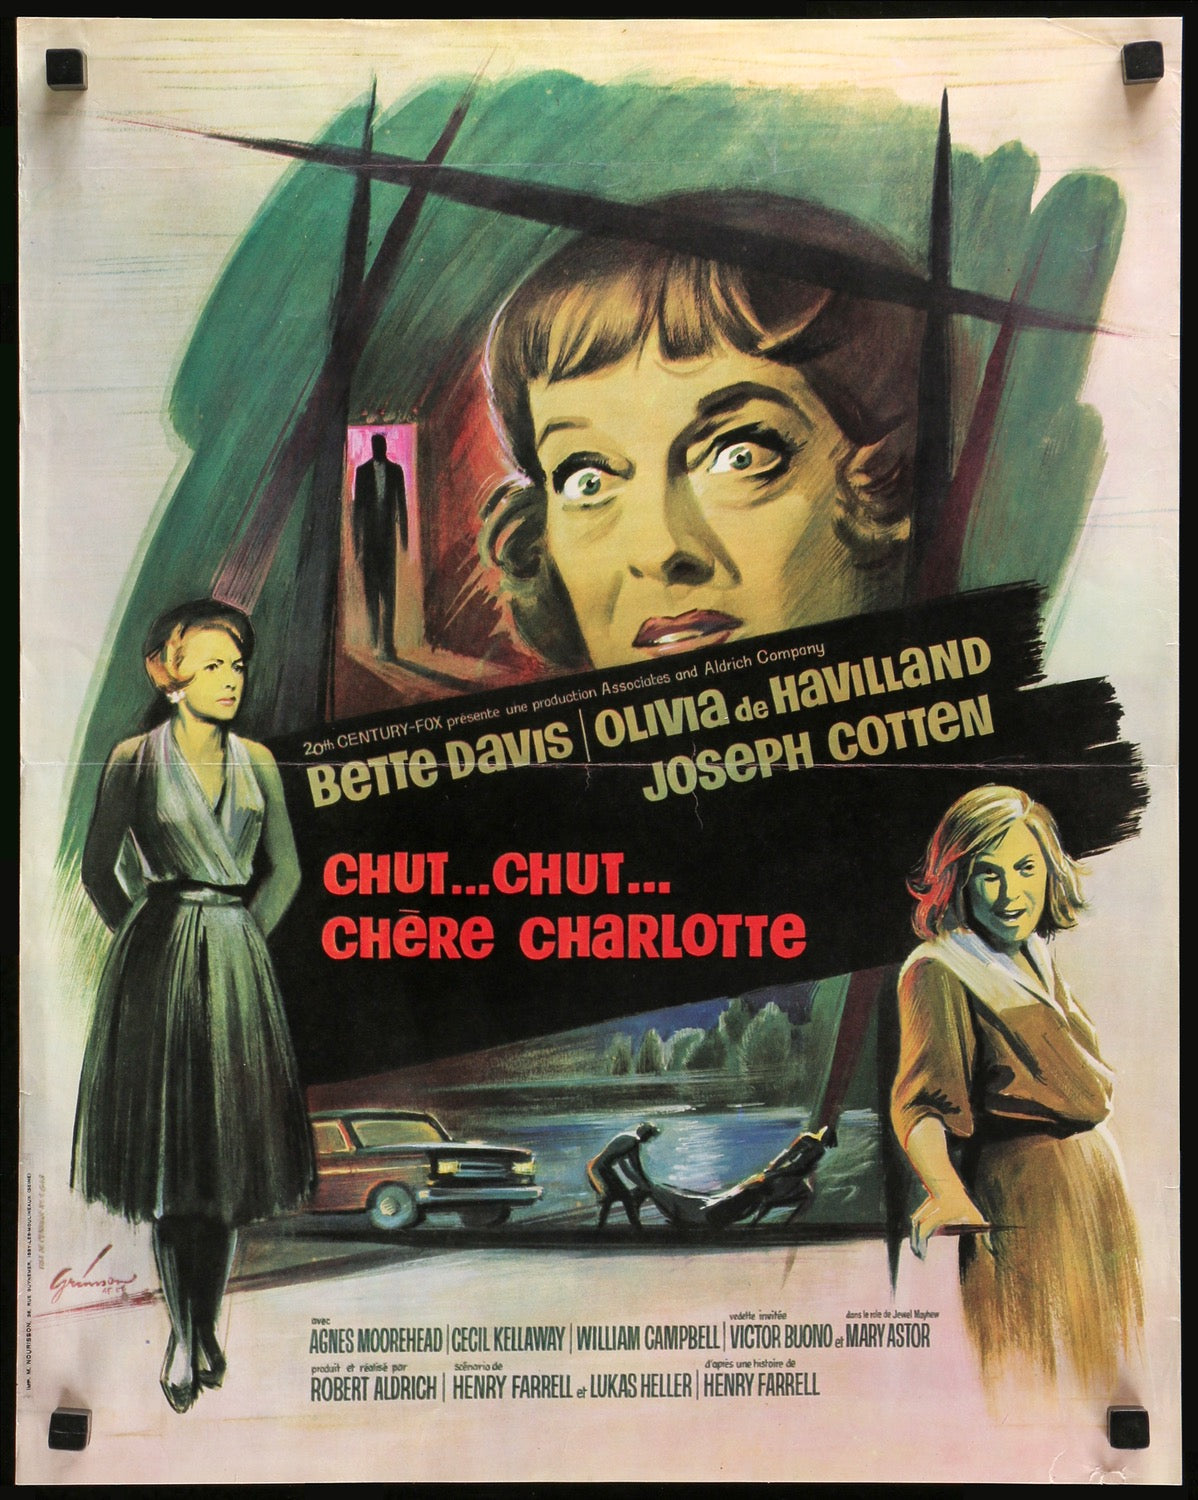 Hush... Hush, Sweet Charlotte (1964) original movie poster for sale at Original Film Art